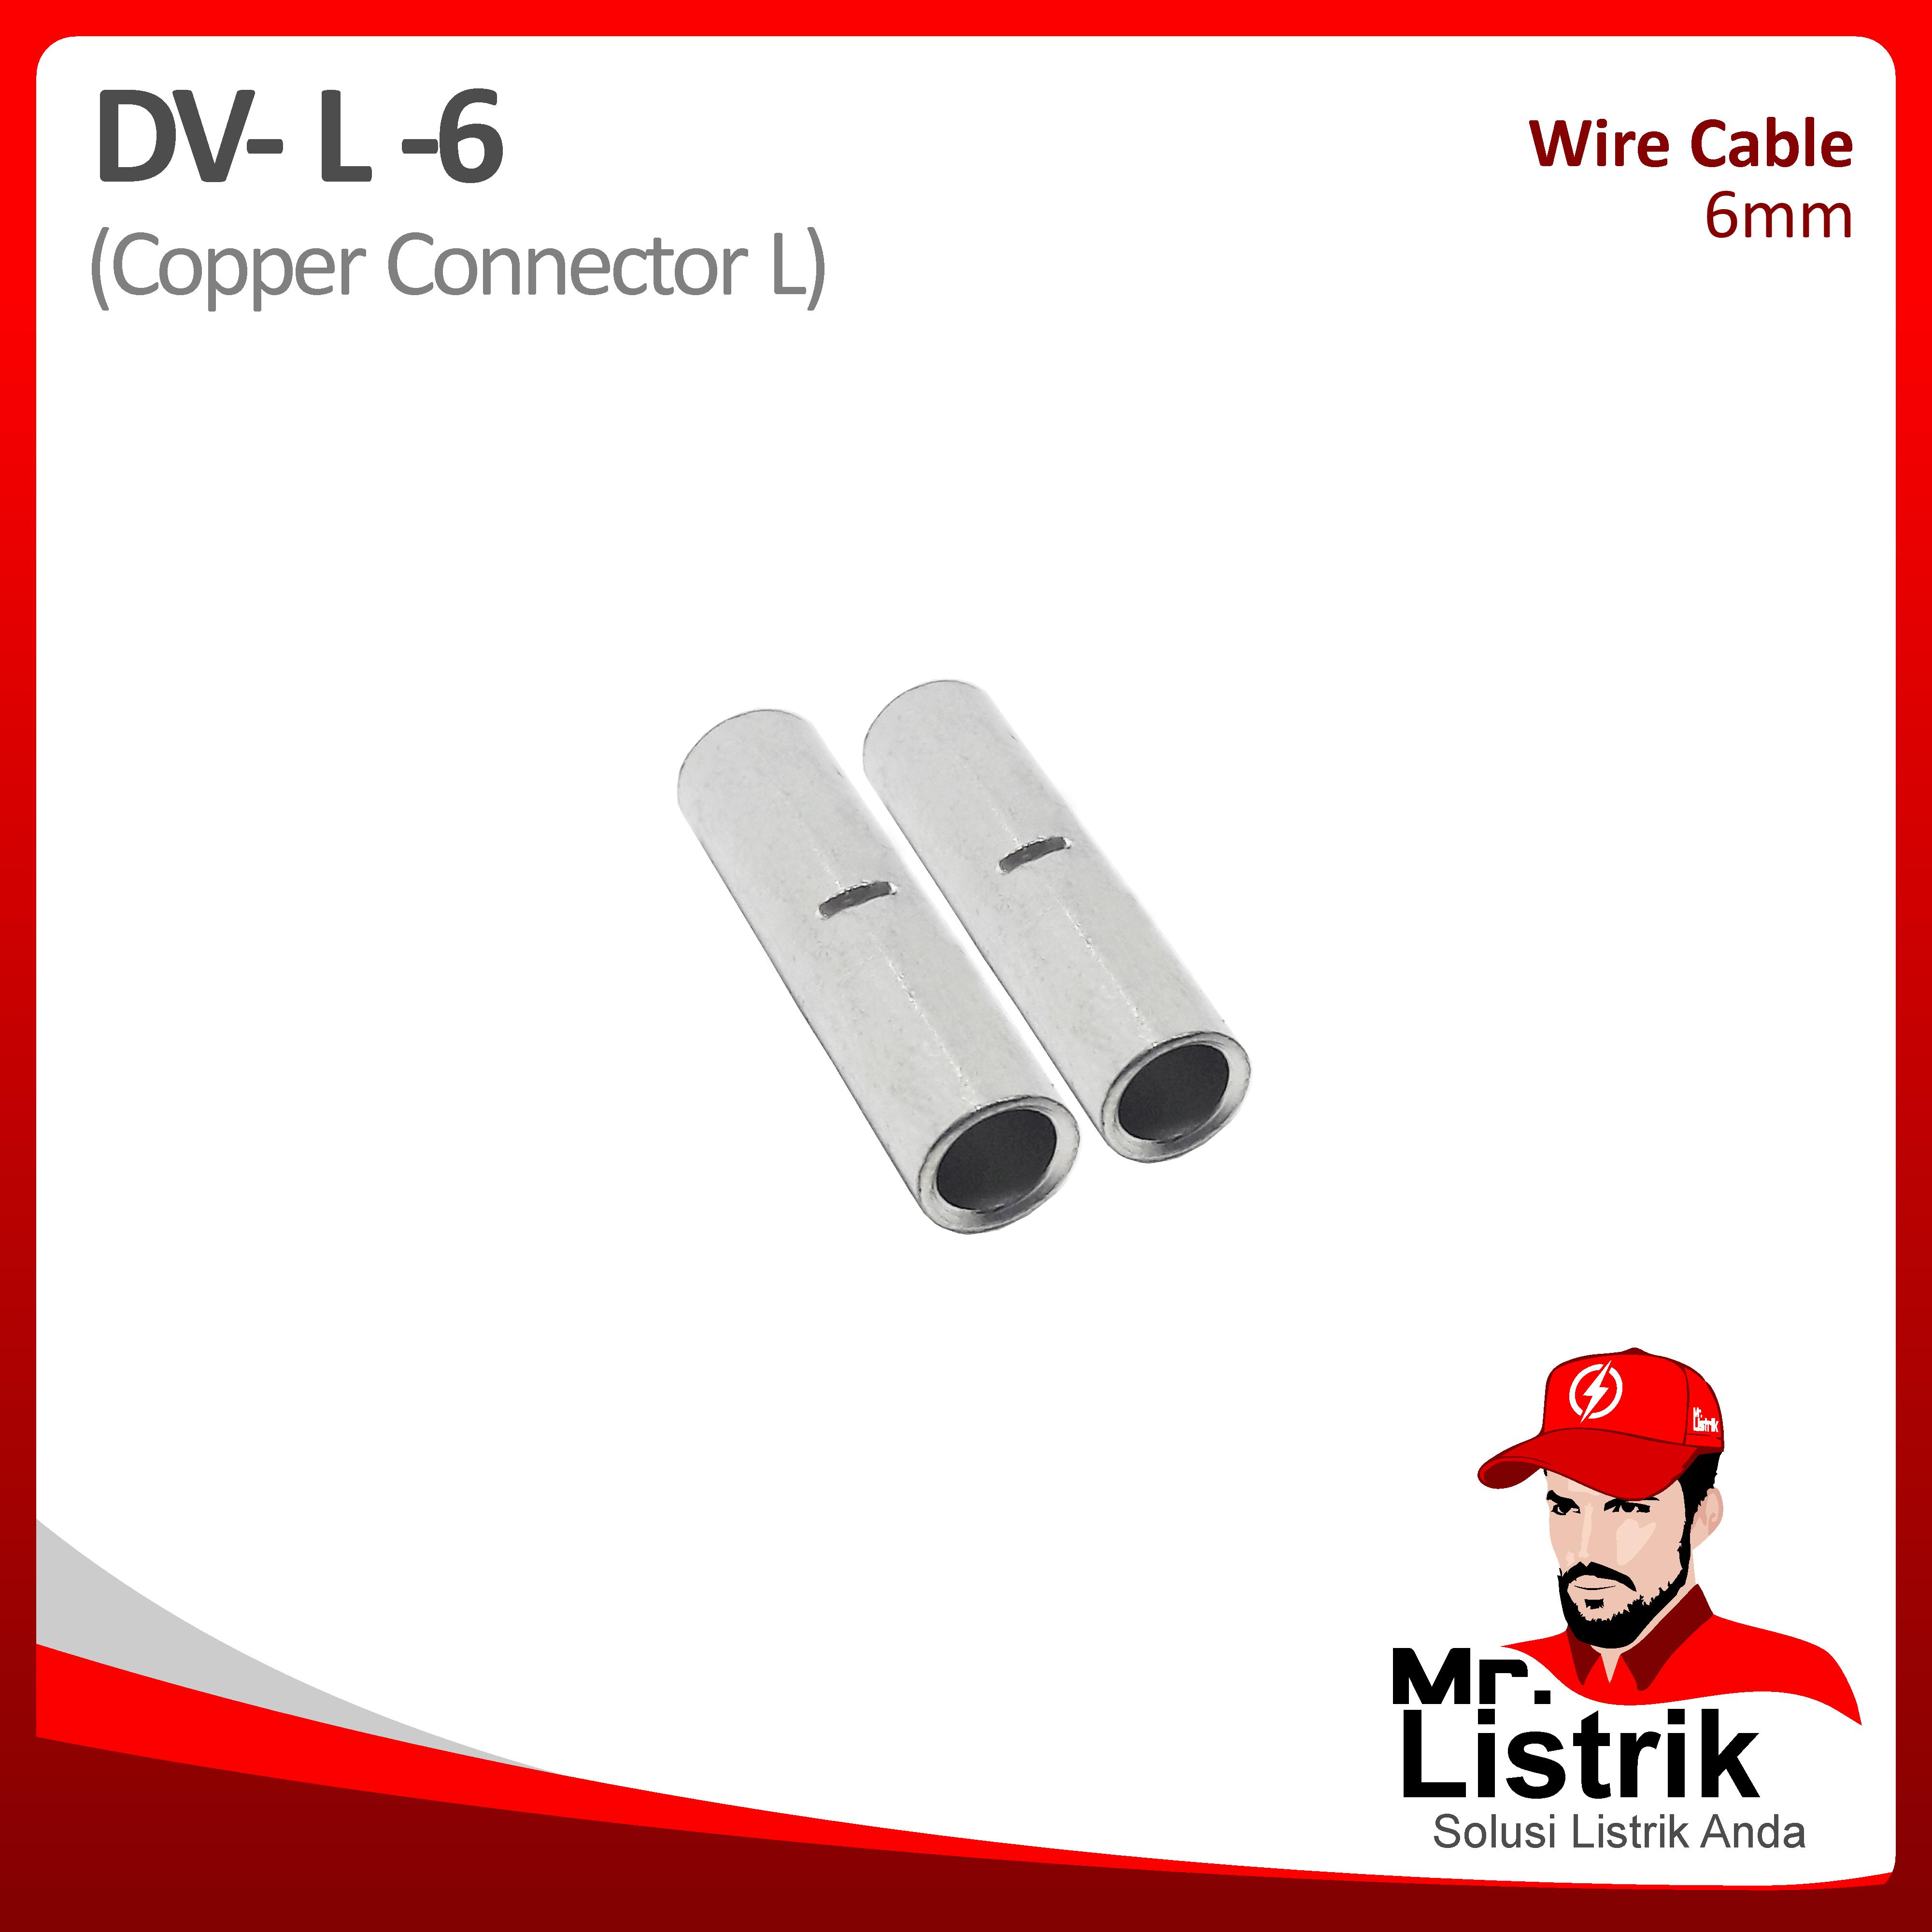 Copper Connector-L 6mm DV L-6